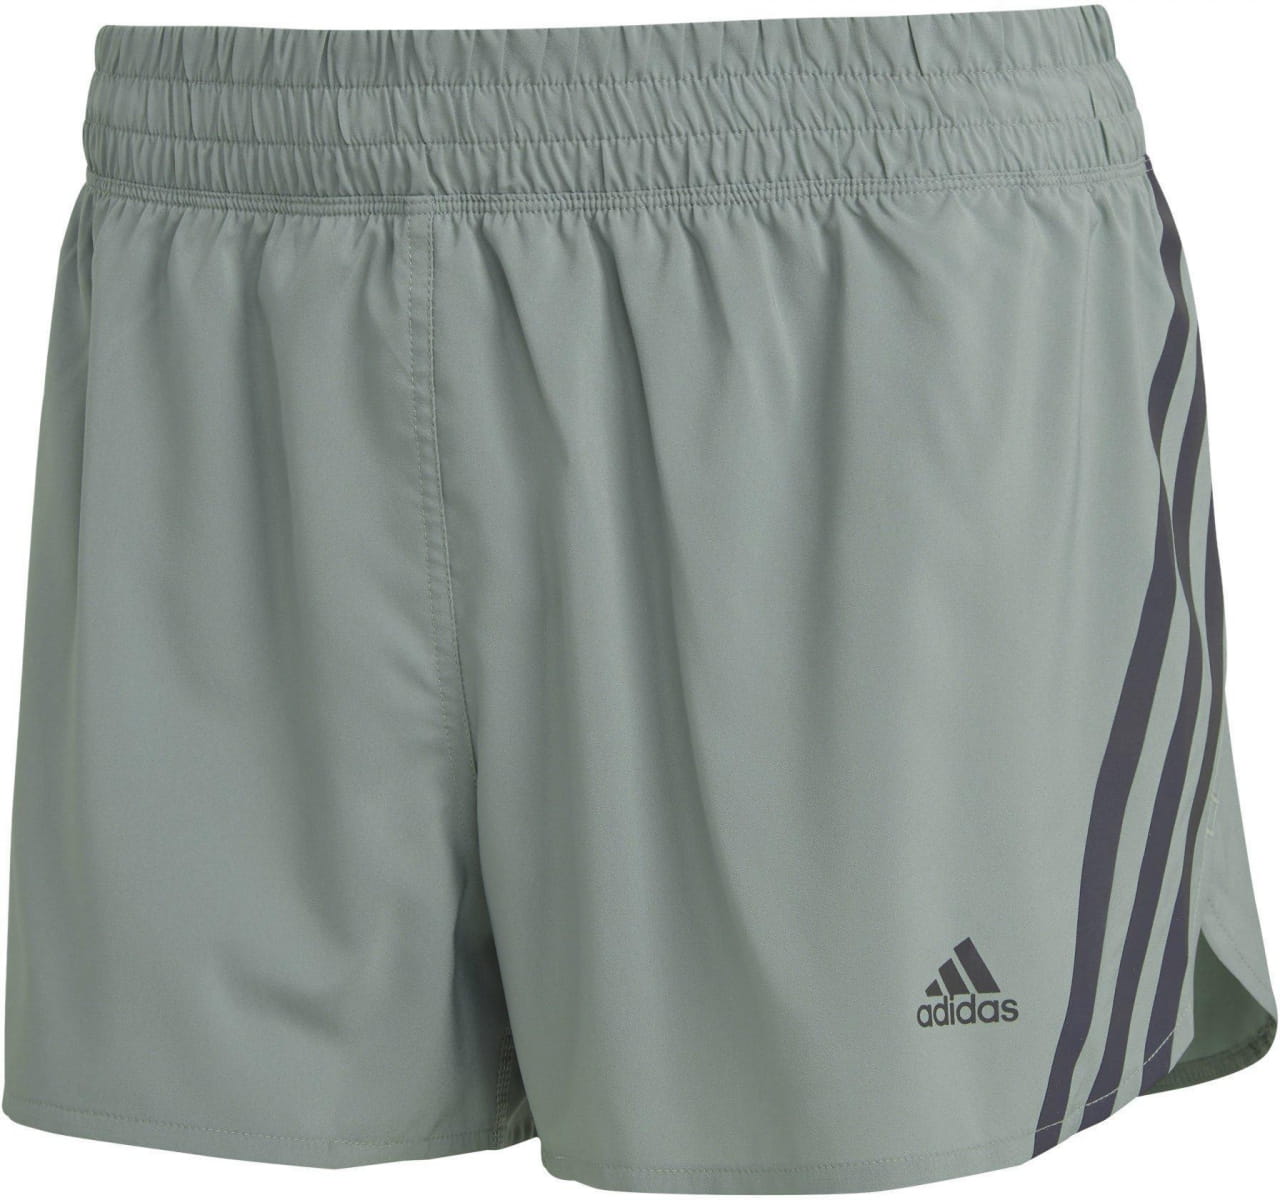 filosoof Traditie Snor adidas Ri 3S Short - Dames shorts | Sanasport.be